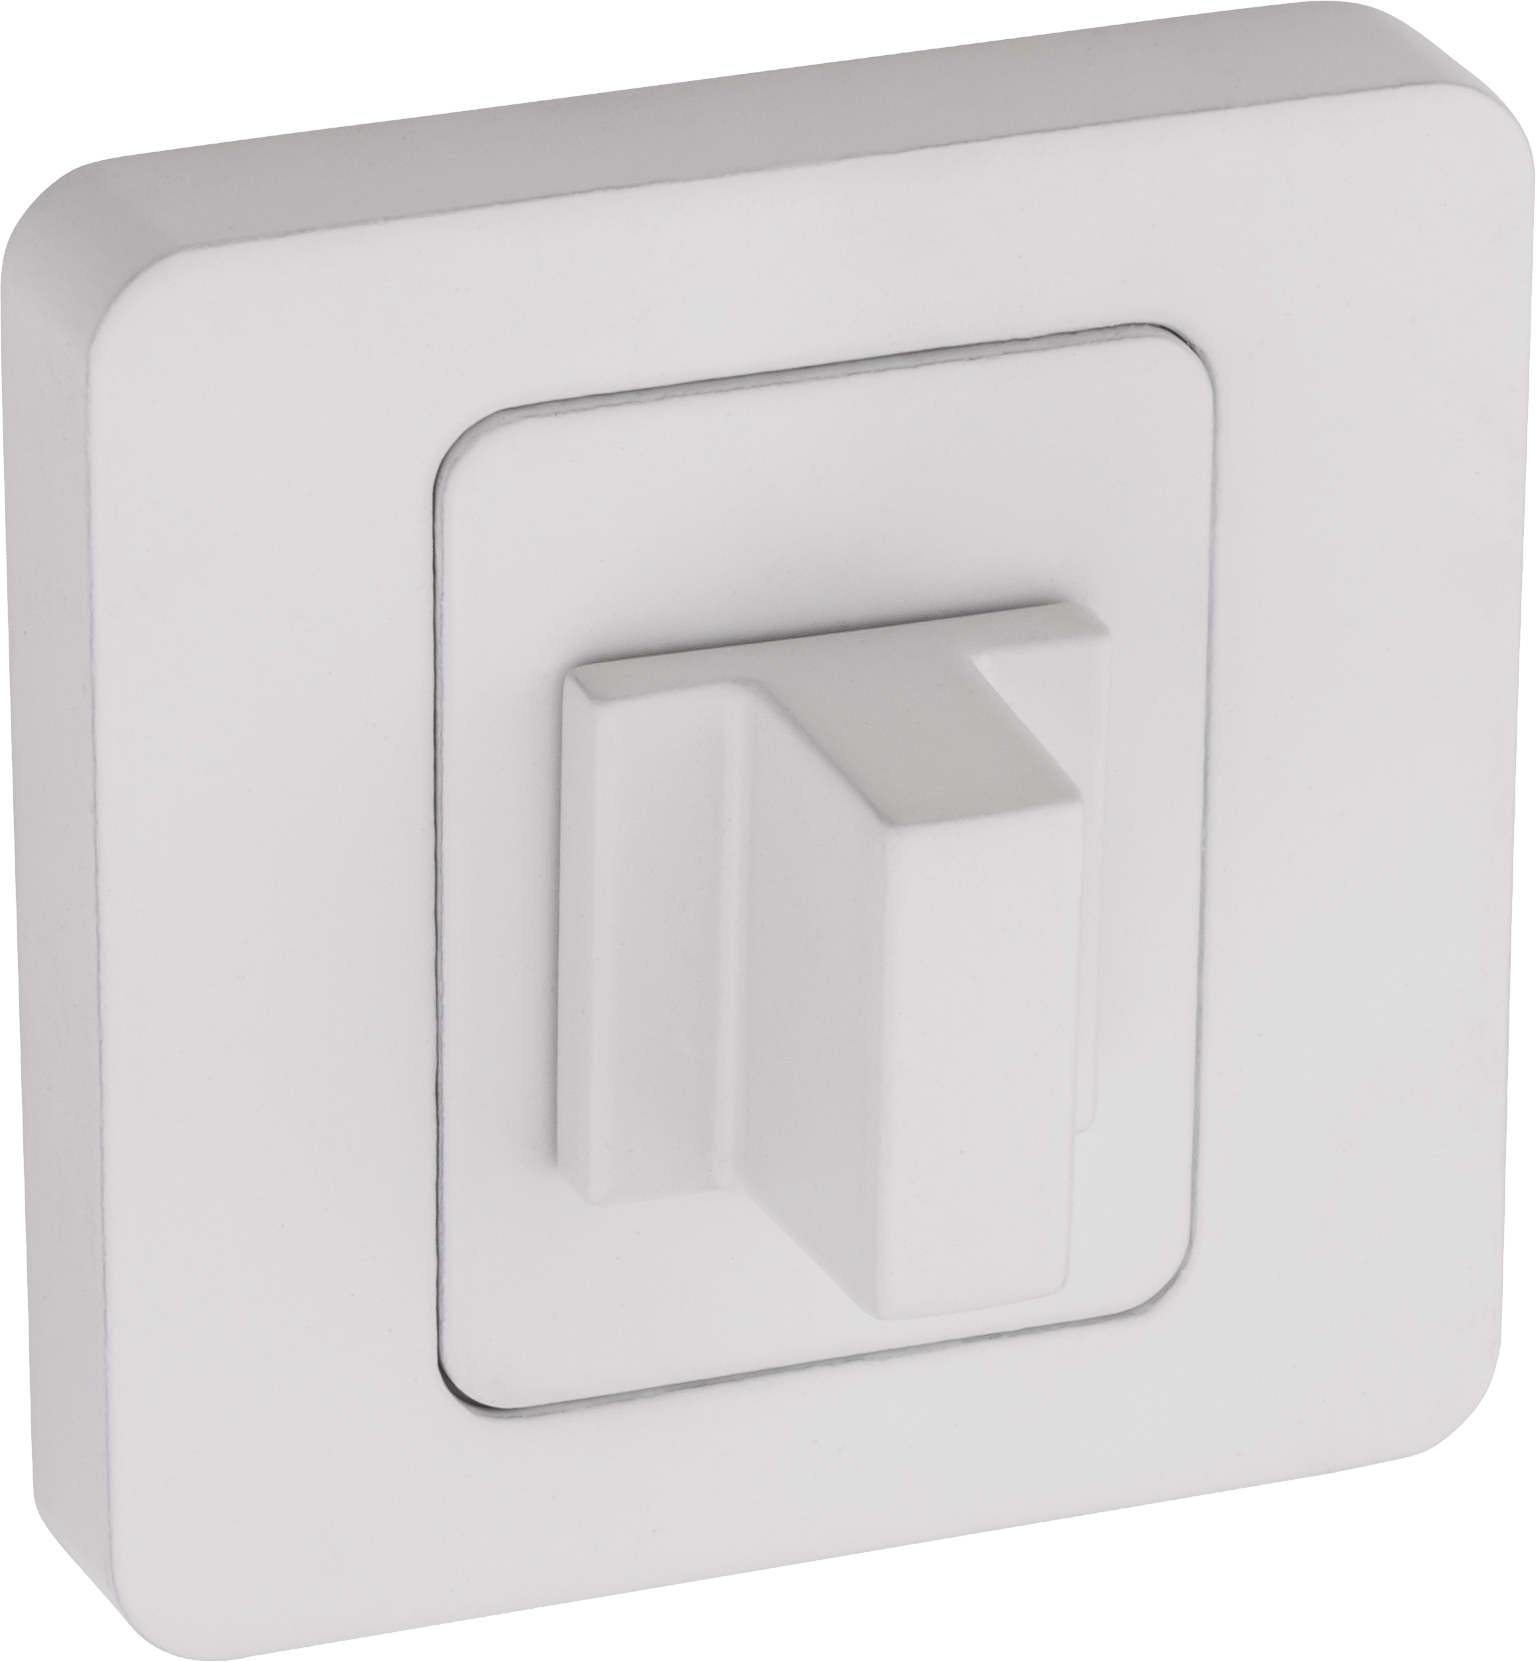 WC užsuktukas QZ-540, kvadratinė, baltos spalvos